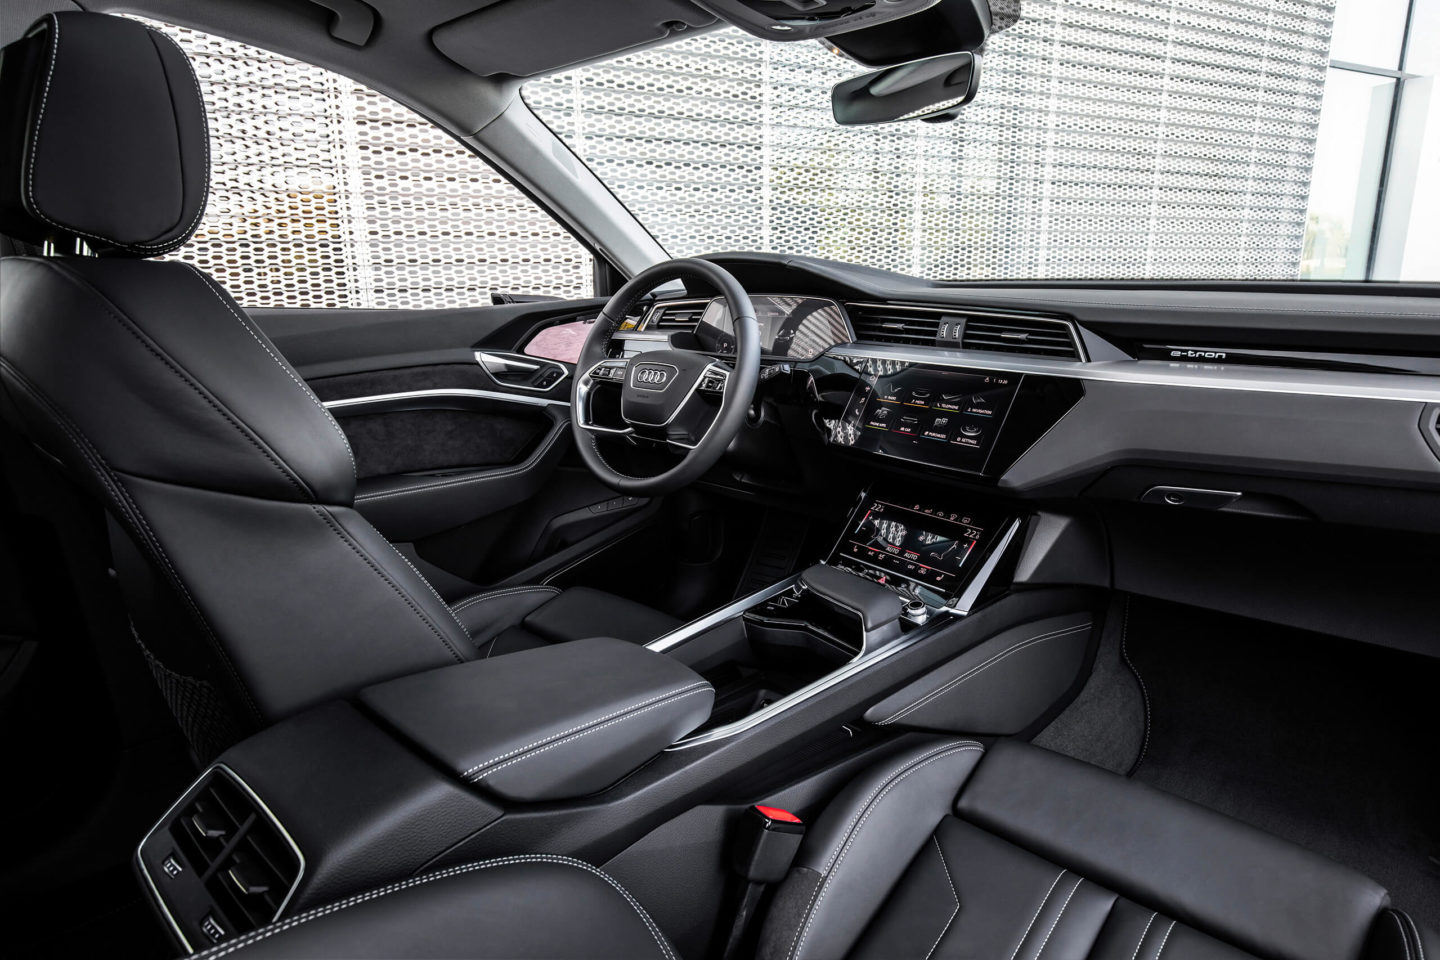 Audi e-tron, 2019